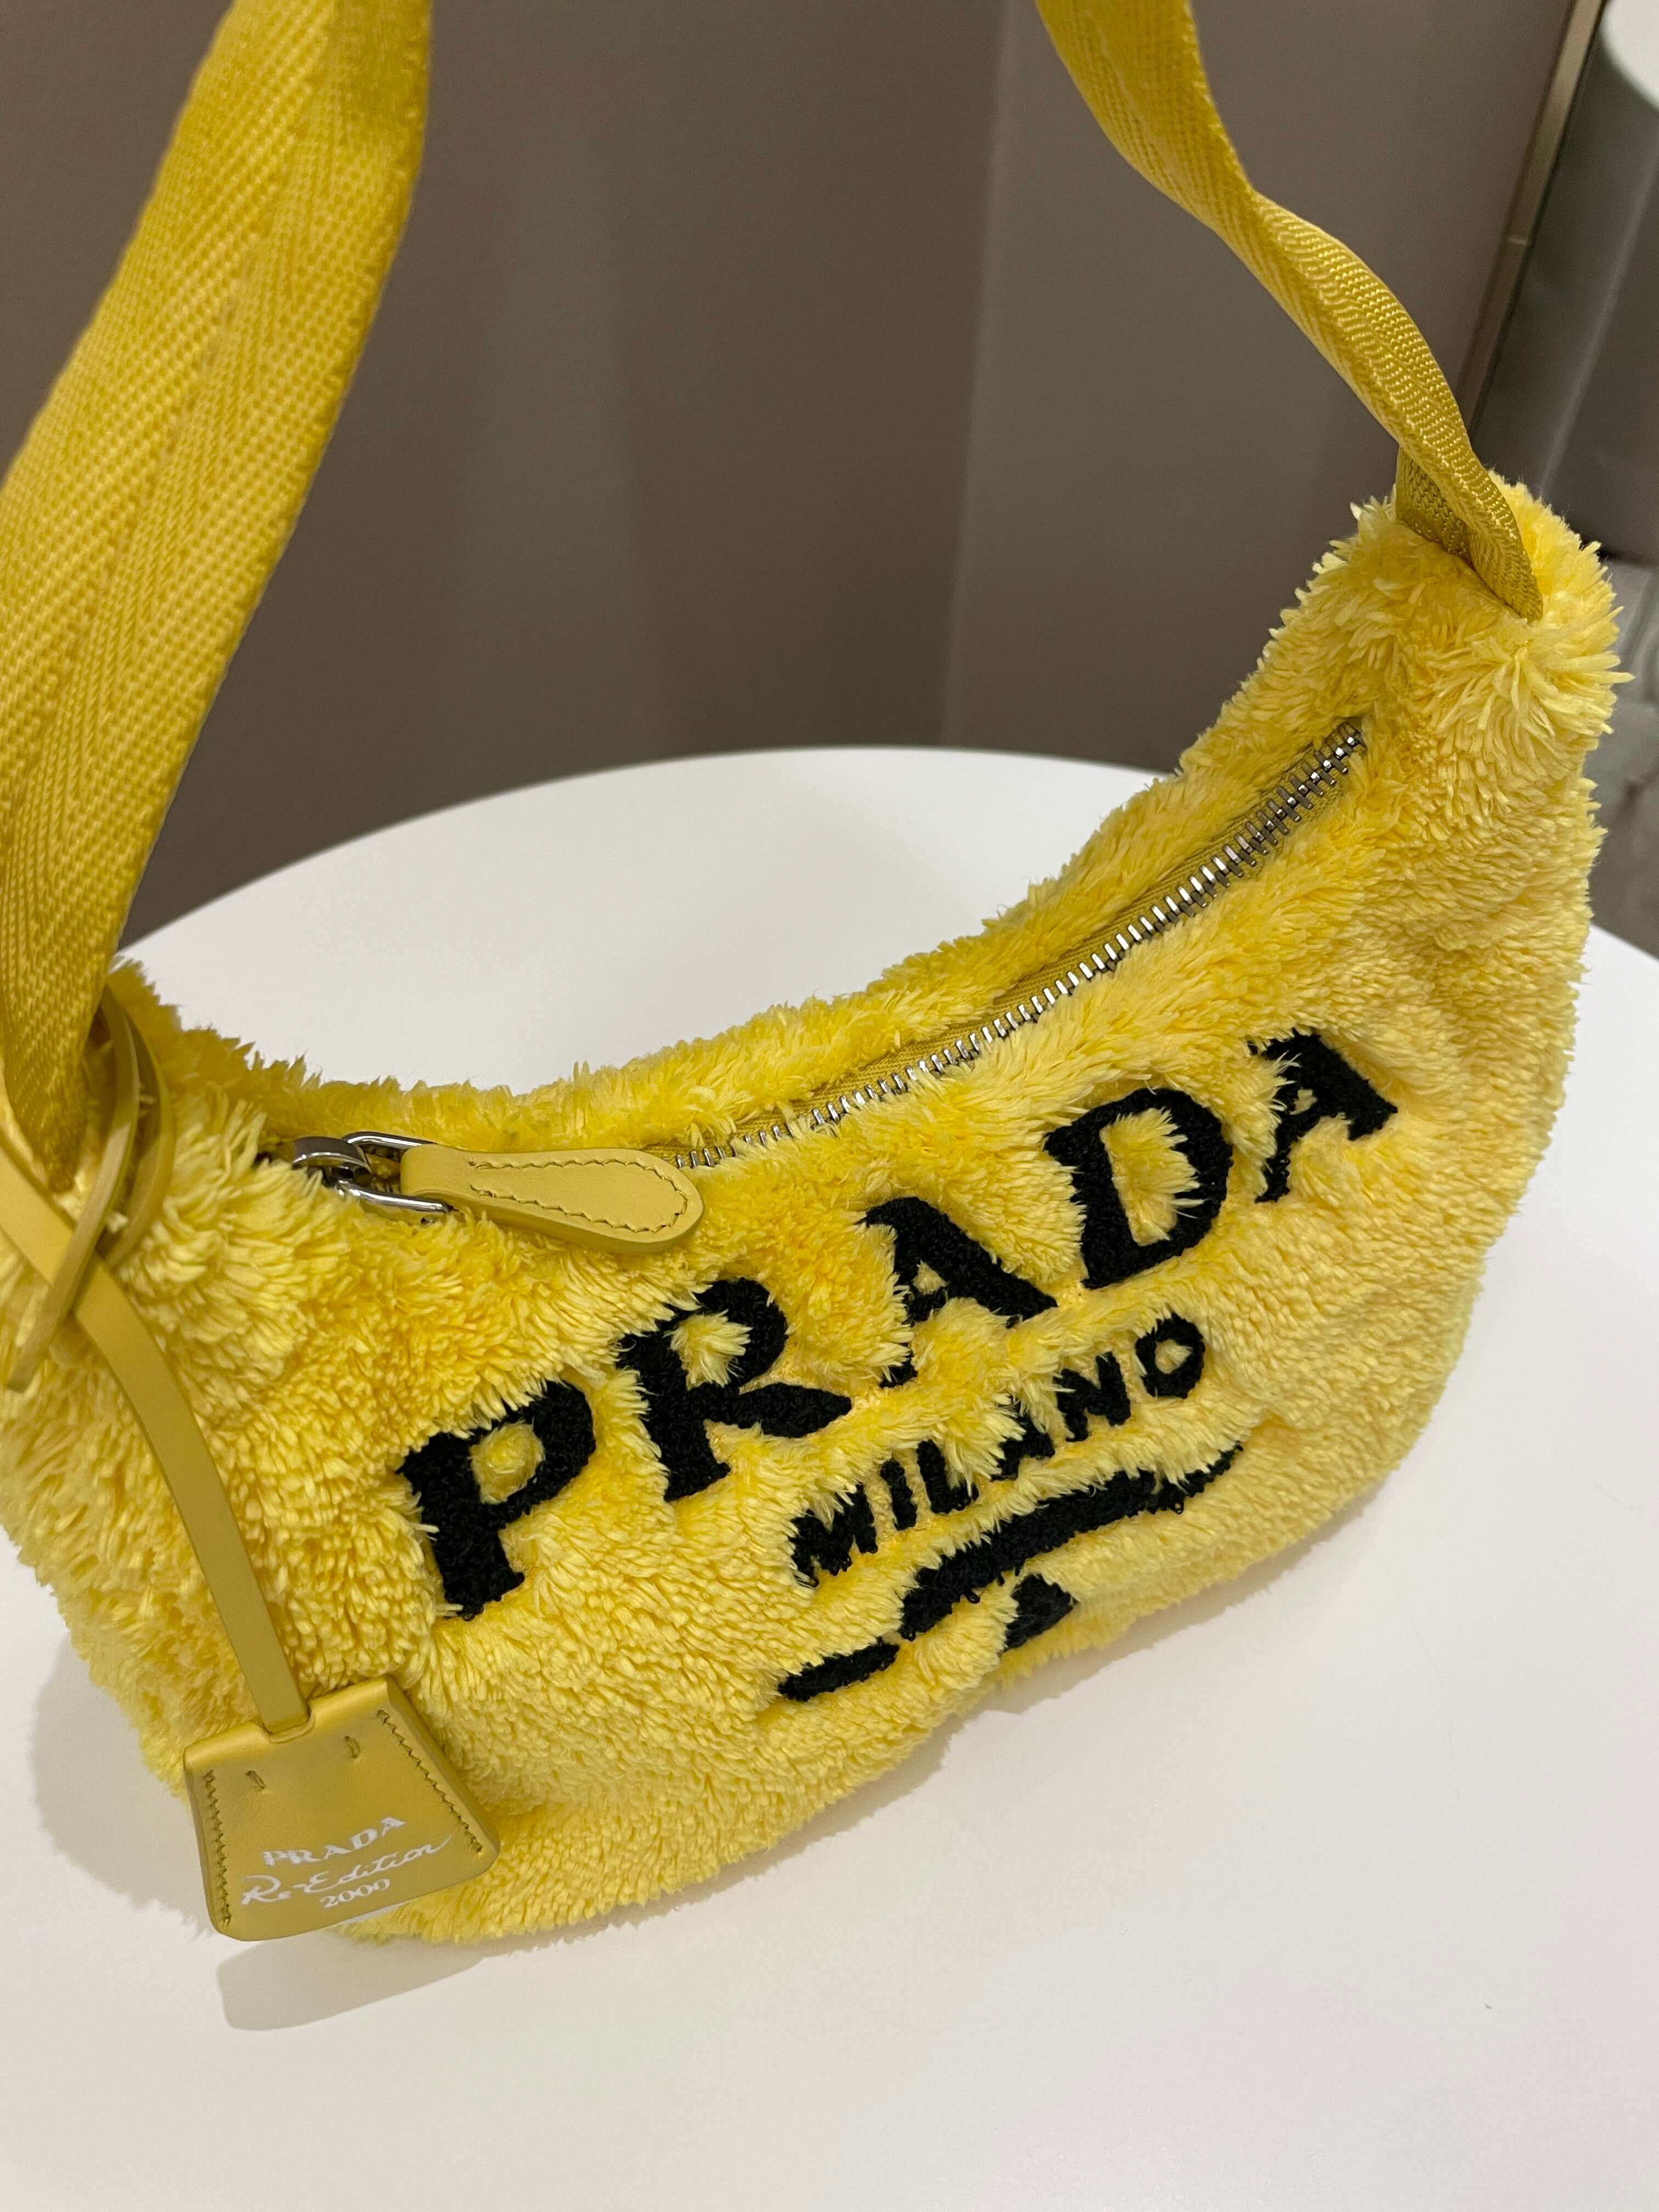 Prada Re-Edition 2000 Bag Yellow Terry